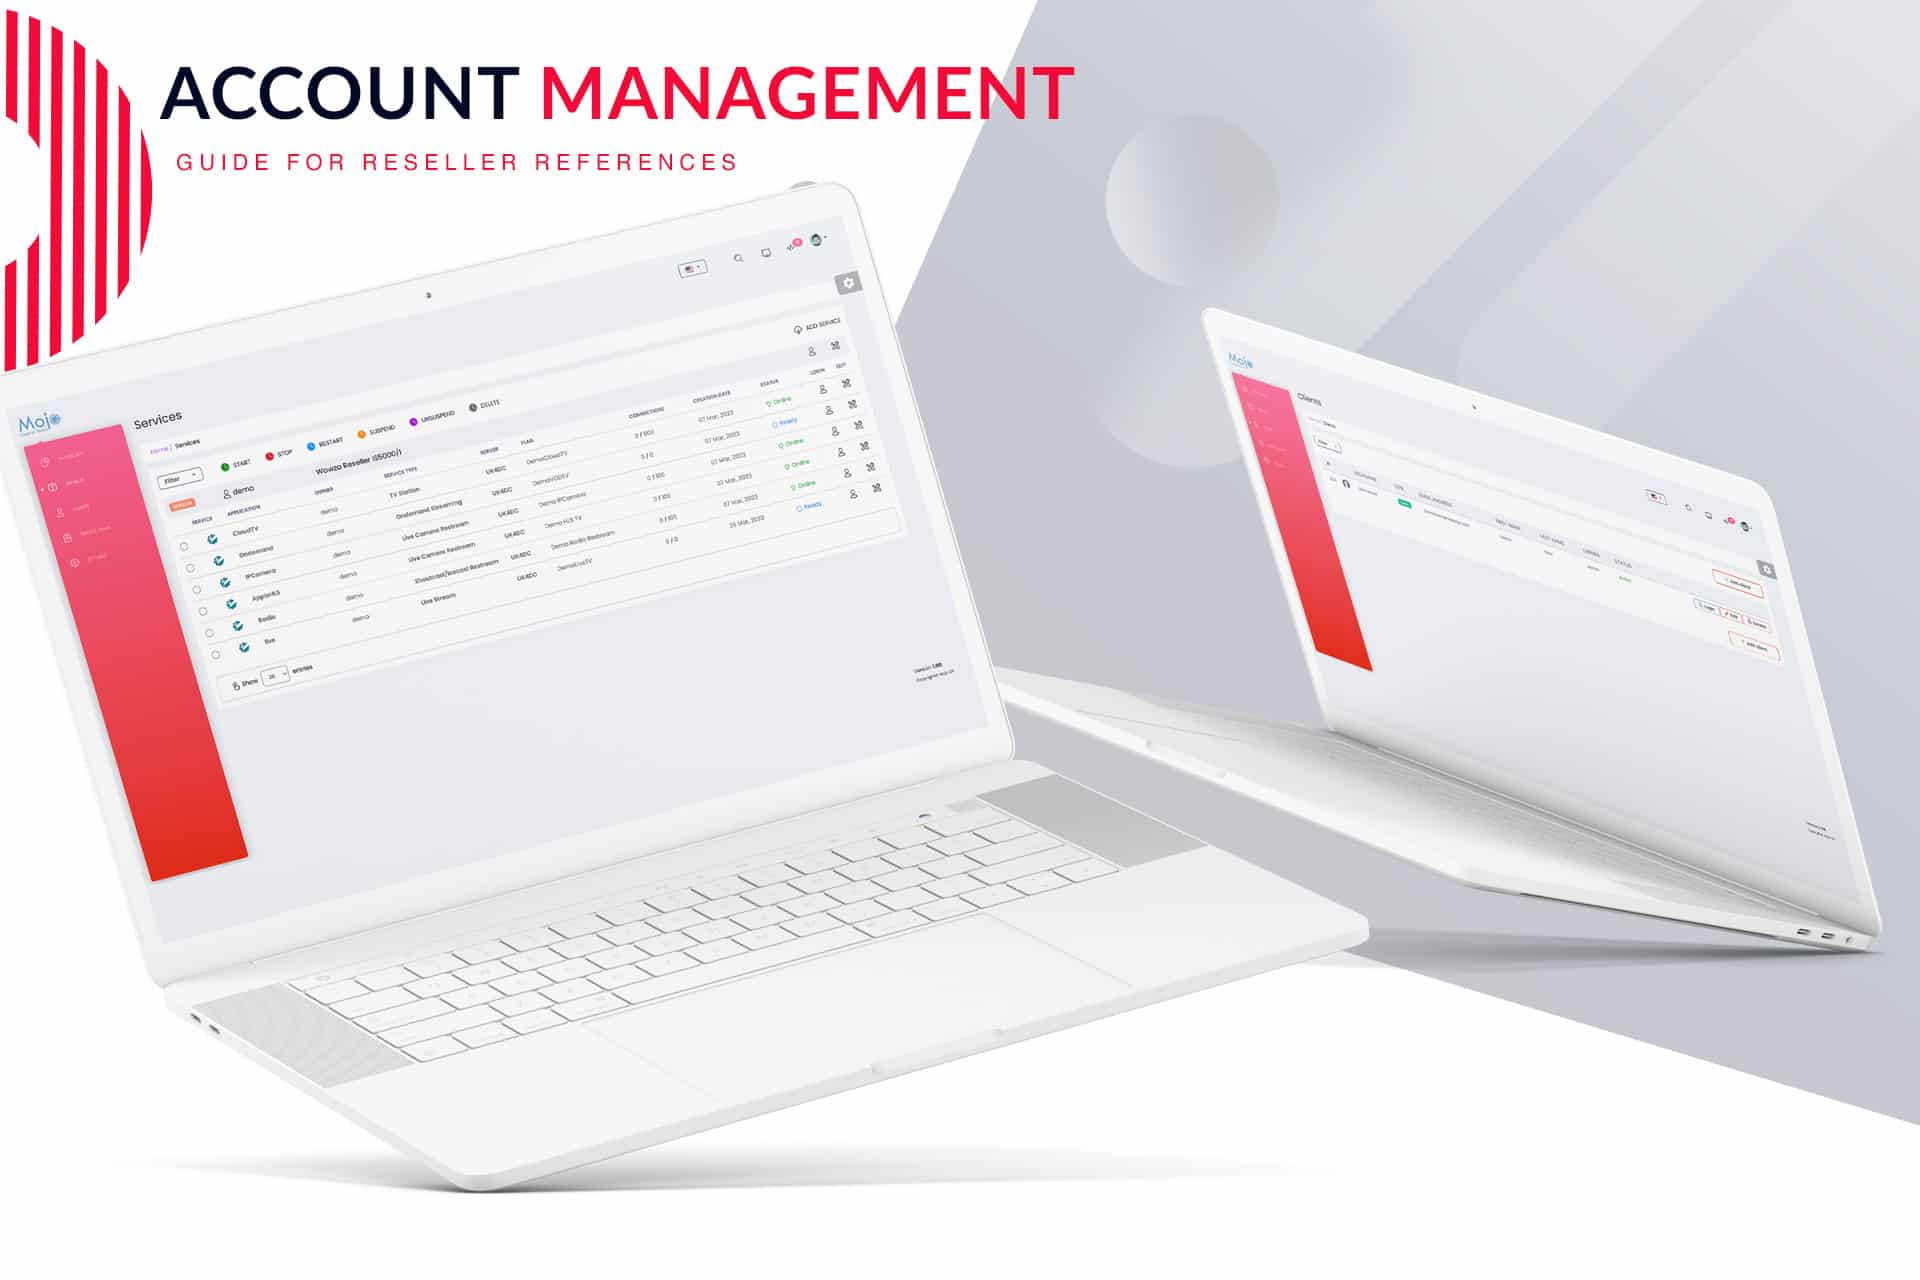 Managing Existing Accounts